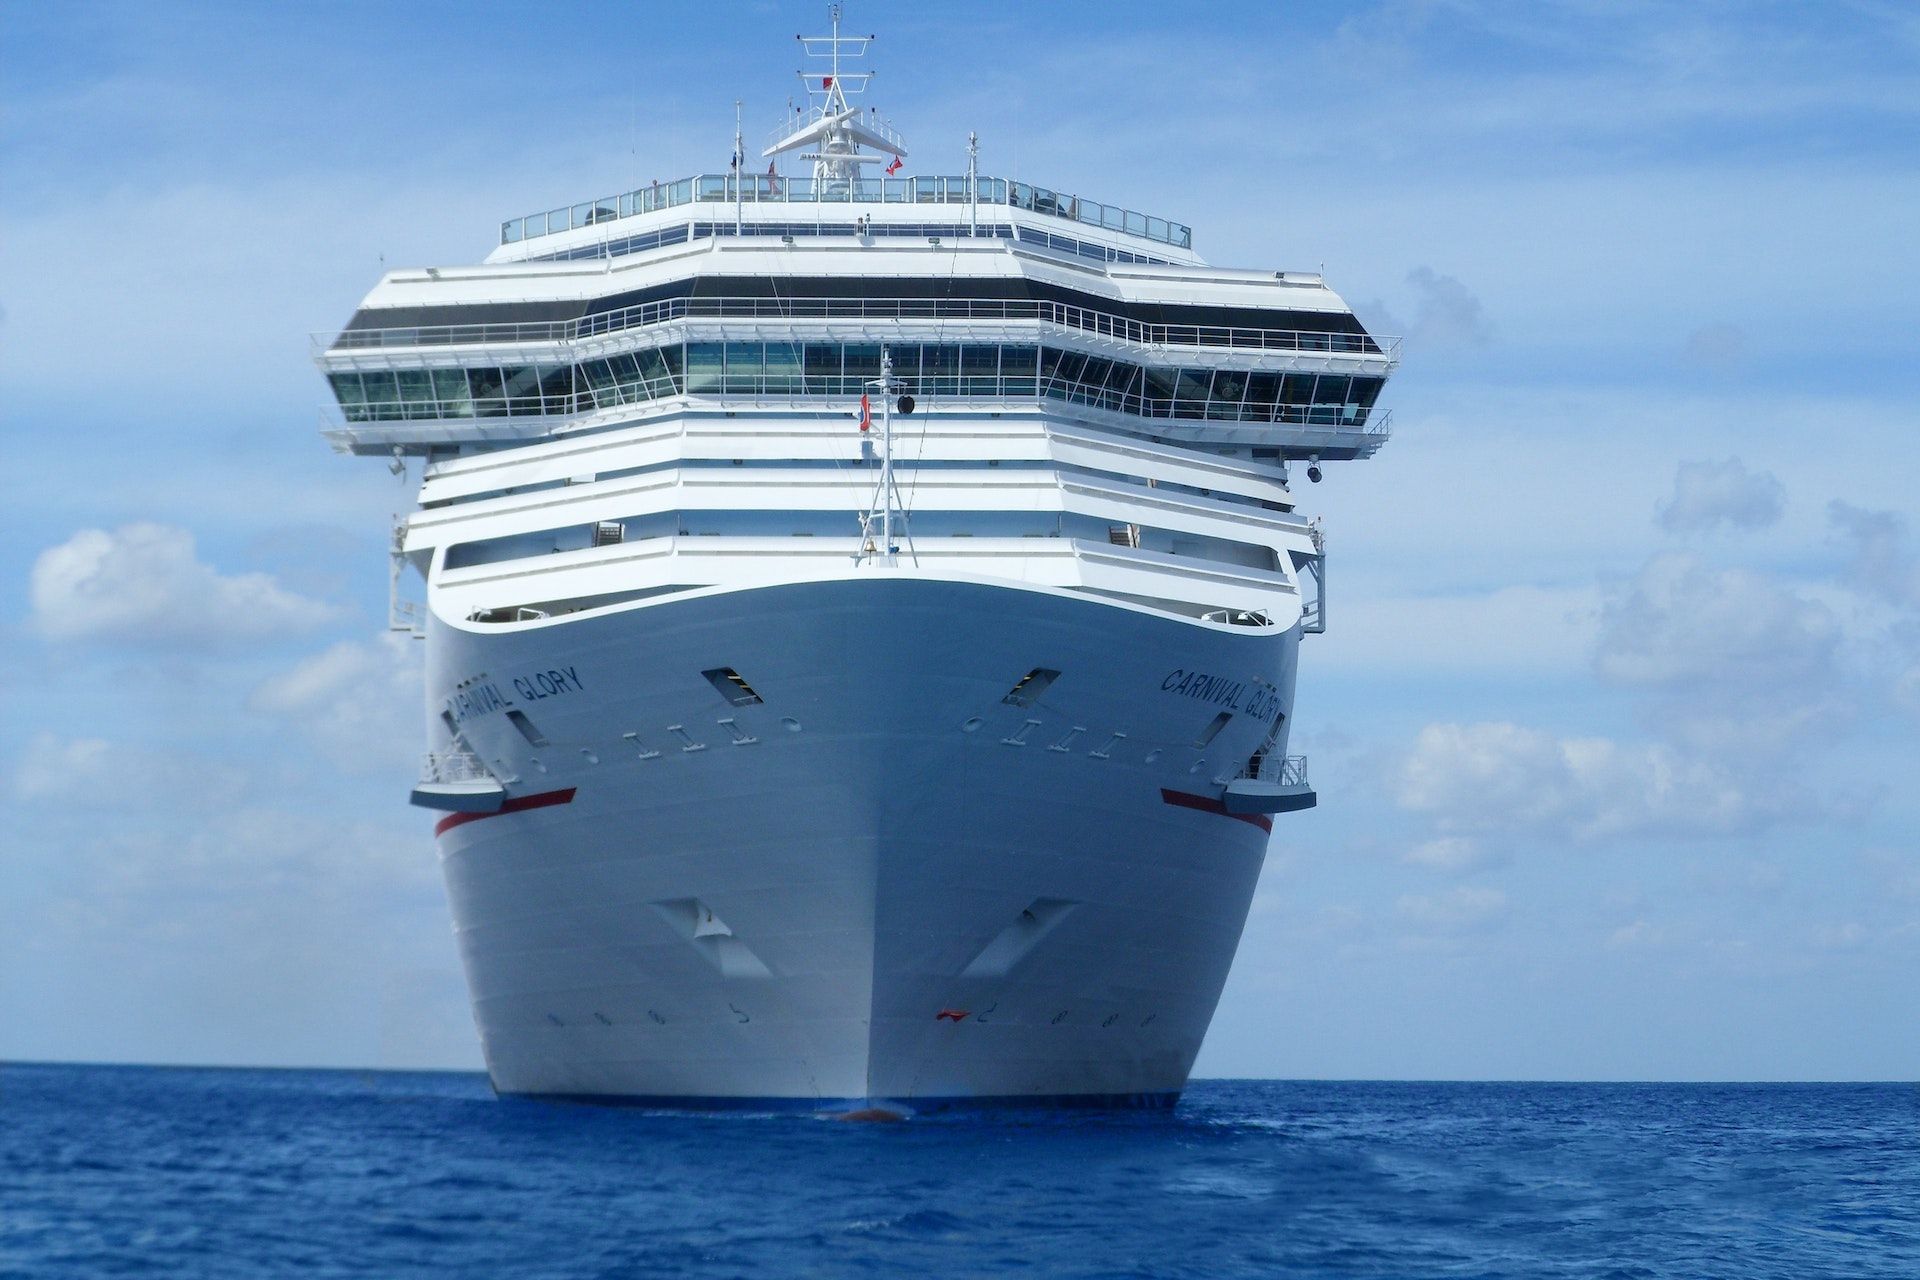 a white cruise ship on a blue sea against a blue sky